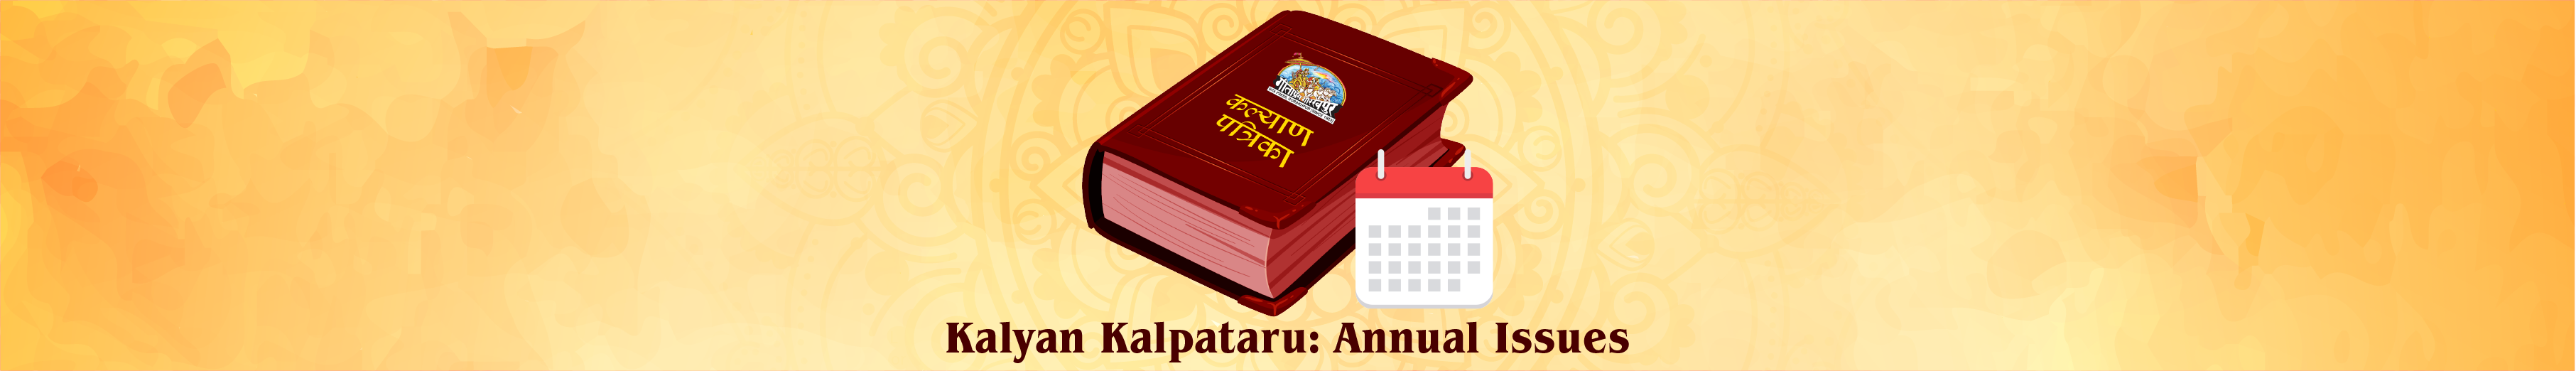 Kalyan Kalpataru: Annual Issues